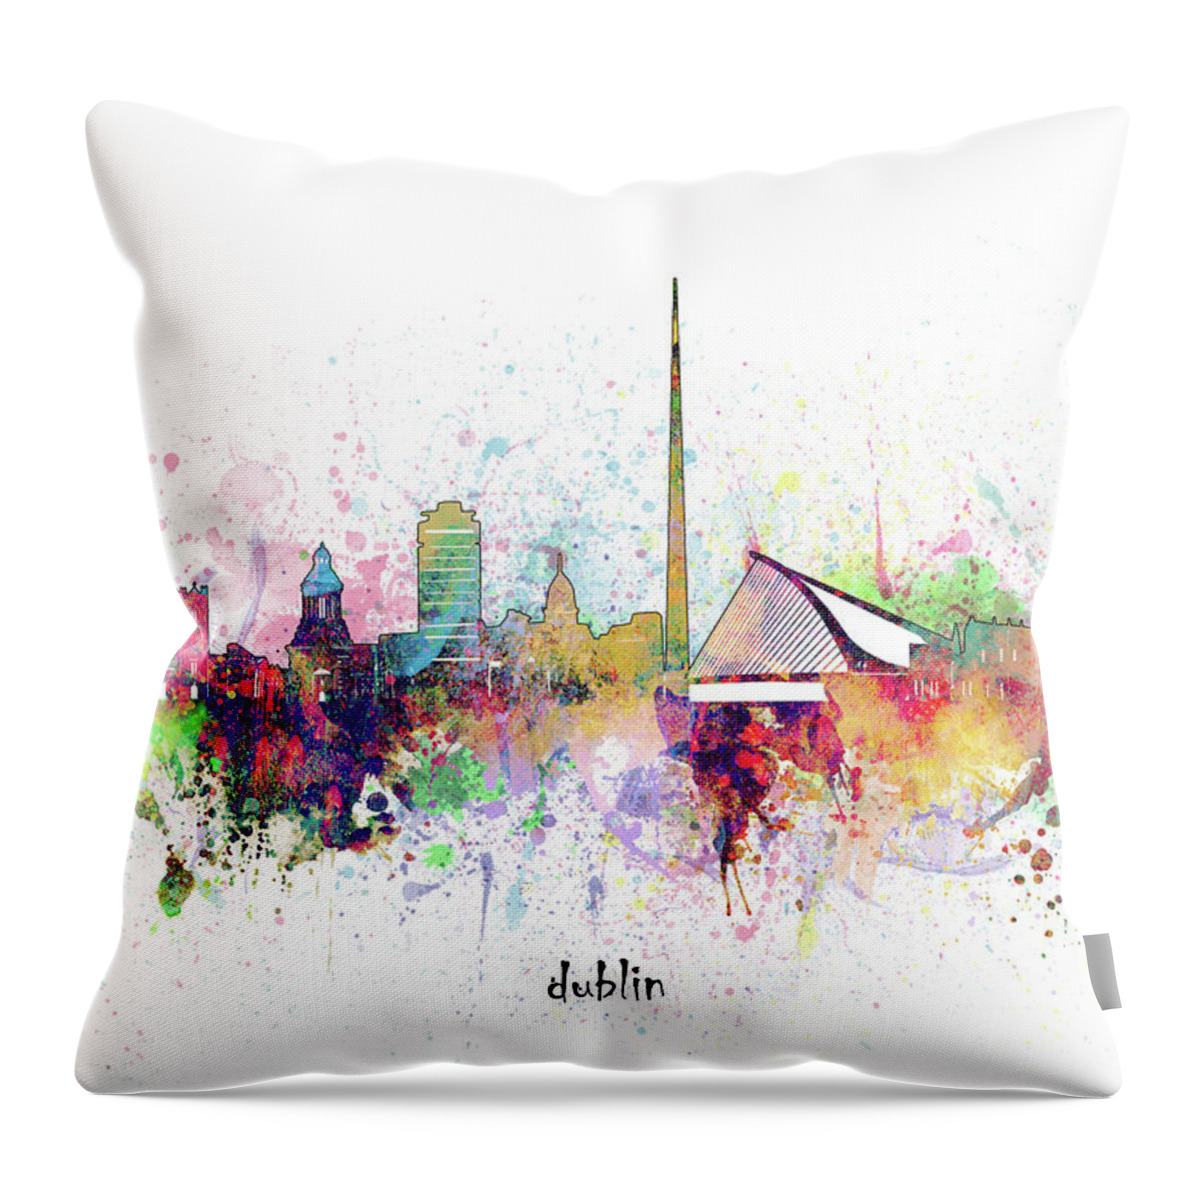 Dublin Throw Pillow featuring the digital art Dublin Skyline Artistic by Bekim M